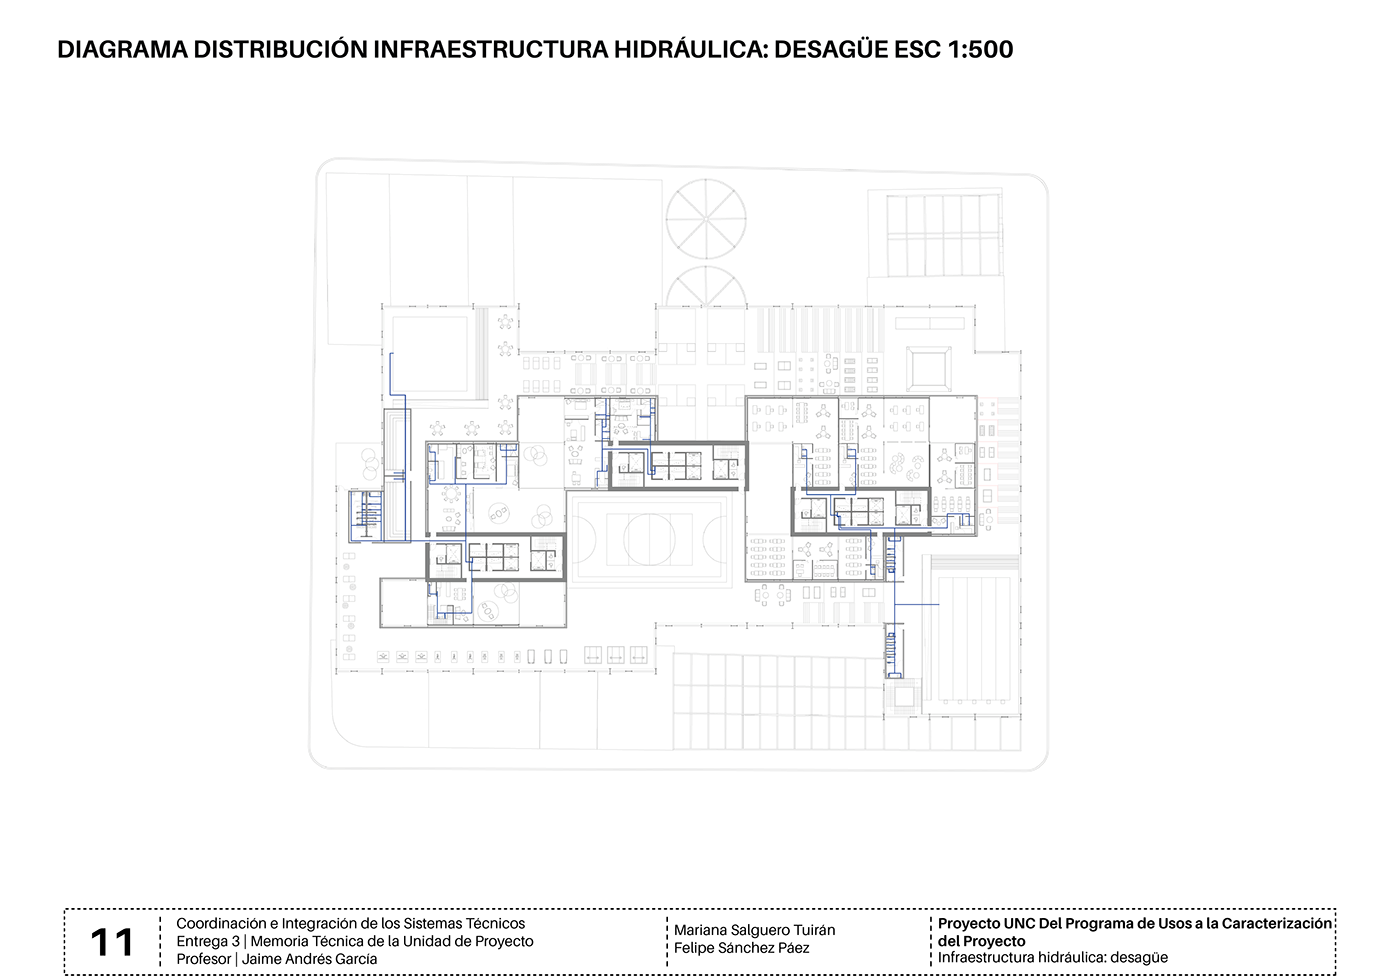 ARQUNIANDES ARQT2202 architecture arquitectura mixed use rehabilitation diagram Urban Design industrial sports